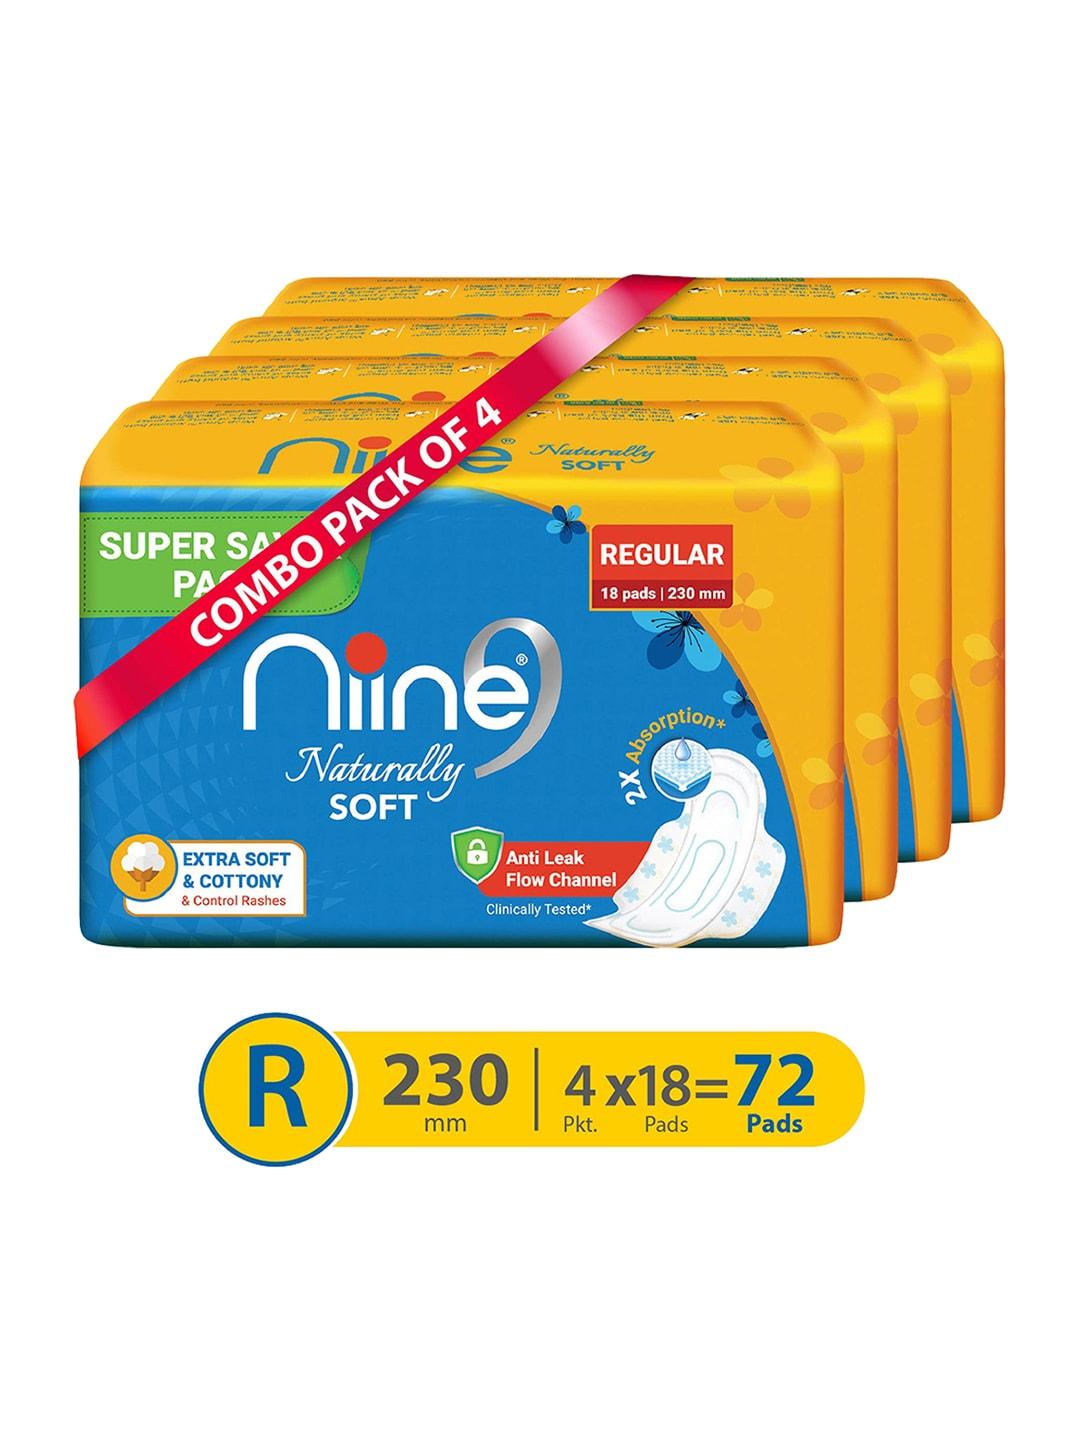 niine set of 4 naturally soft super saver pack regular 230mm sanitary pads - 18 pads each